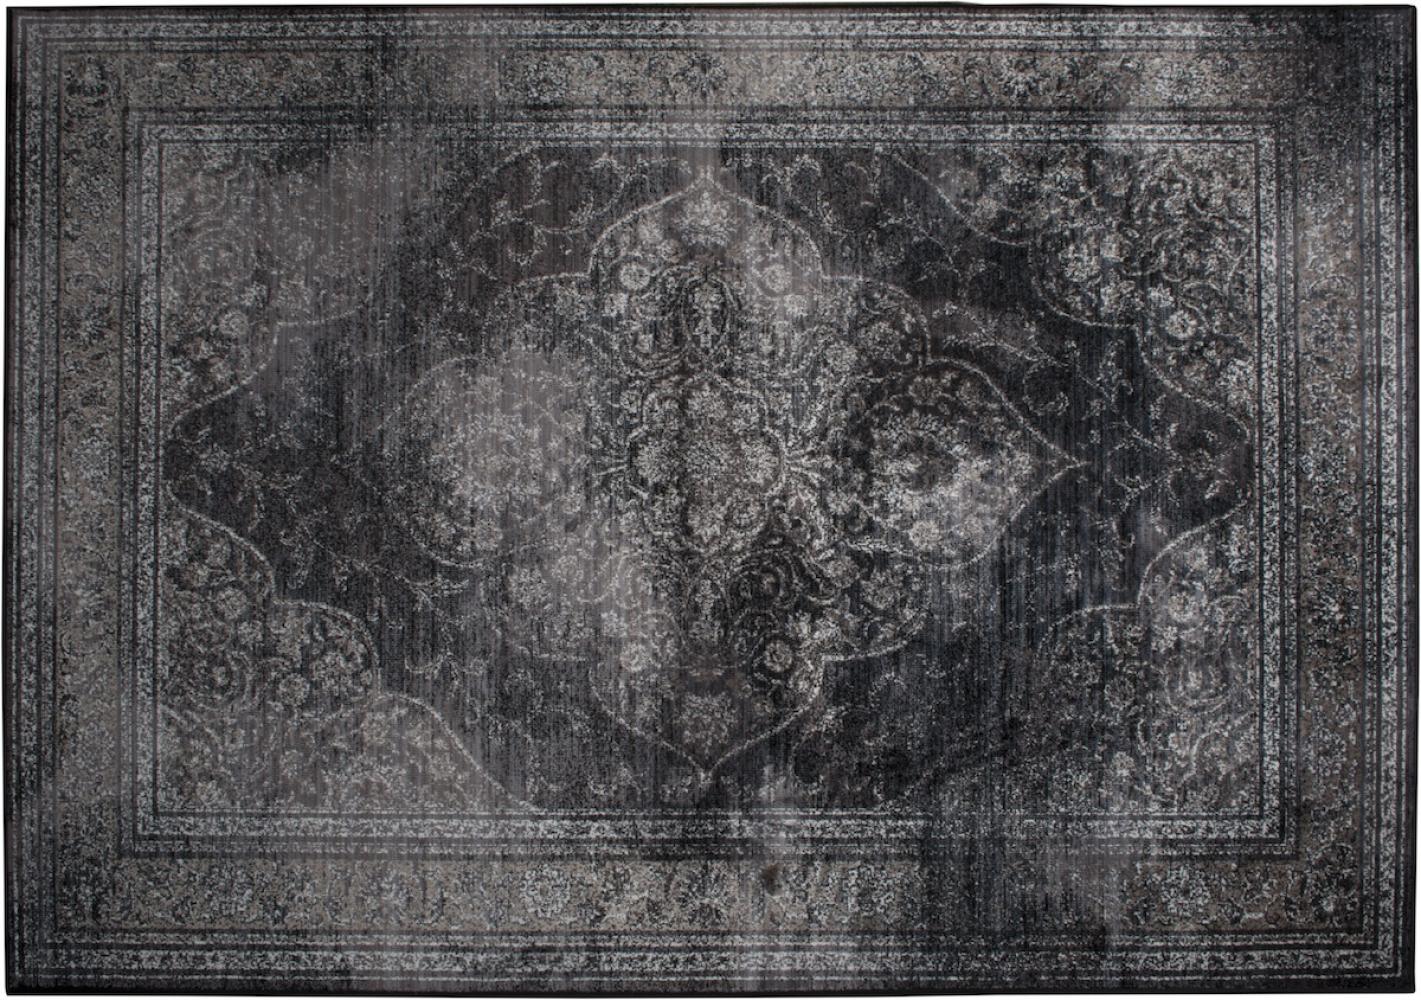 Rugged - Teppich - Dunkel, 170x240cm Bild 1